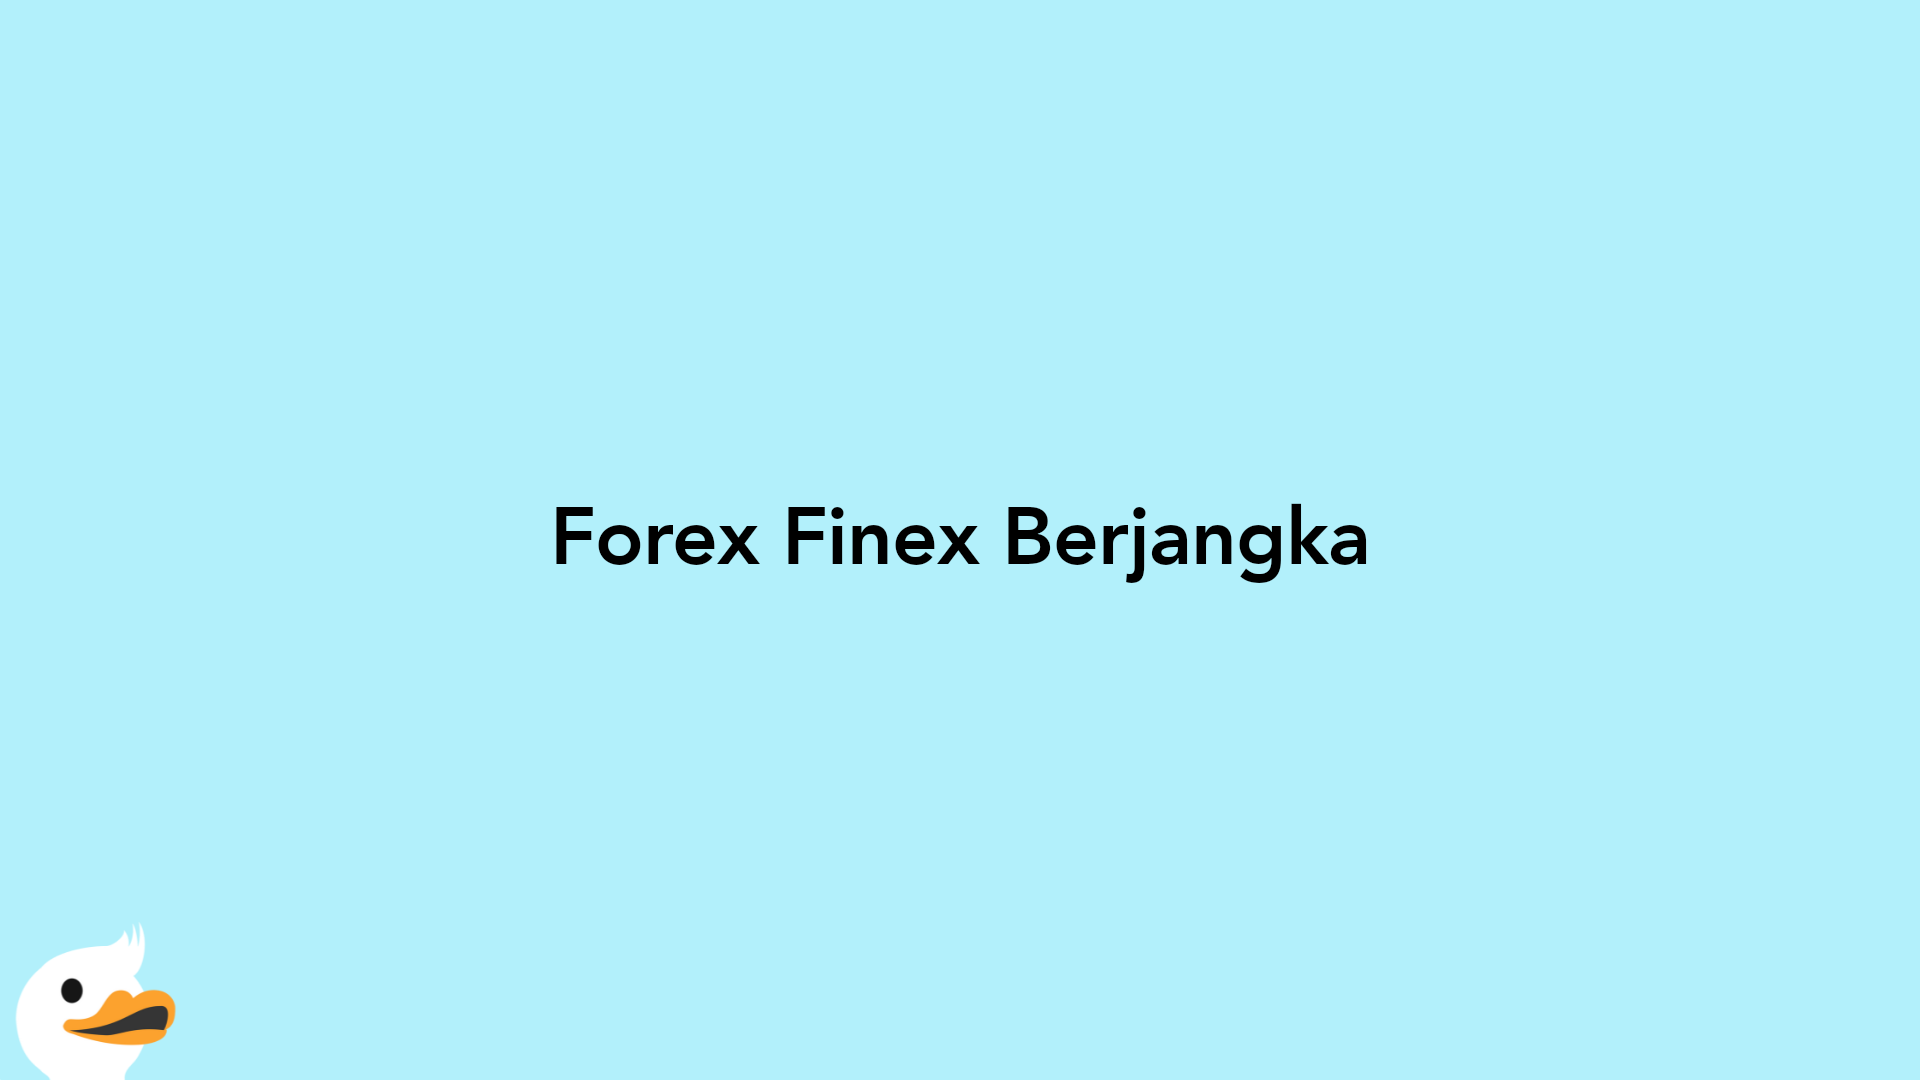 Forex Finex Berjangka